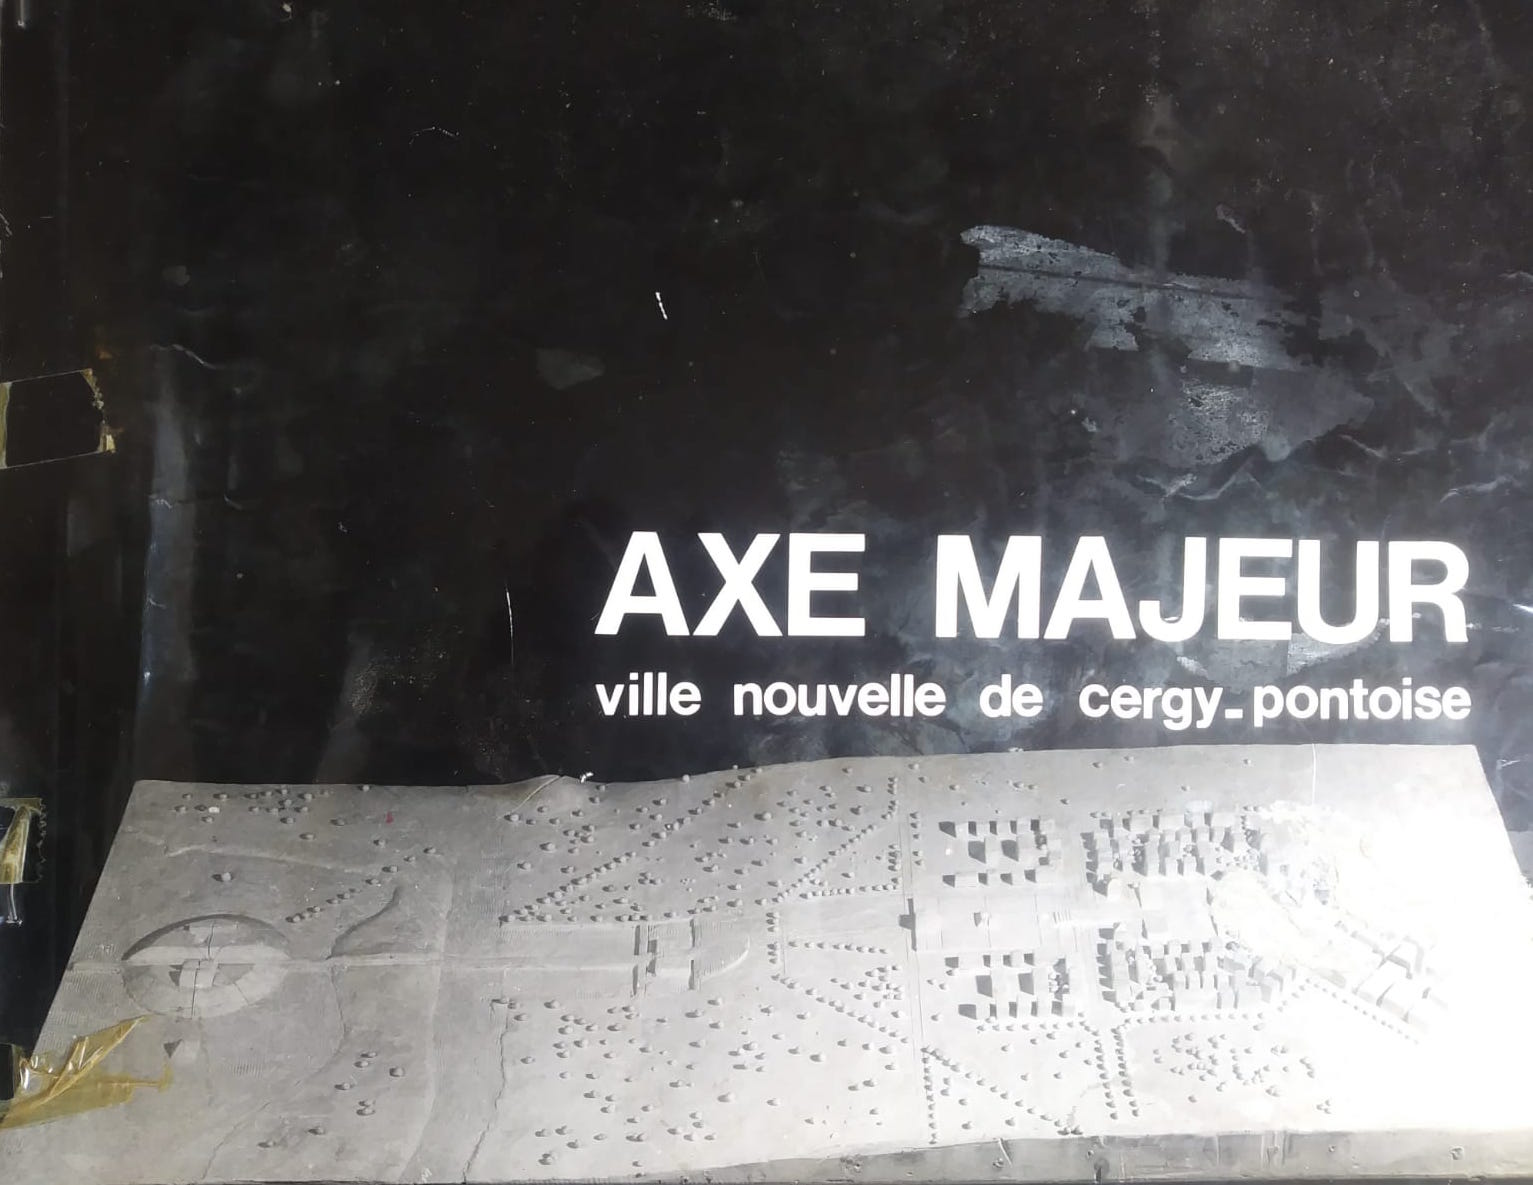 Copertina di un libro che spiega l'opera Axe Majeur ville nouvelle de Cergy-Pontoise, di Dani Karavan